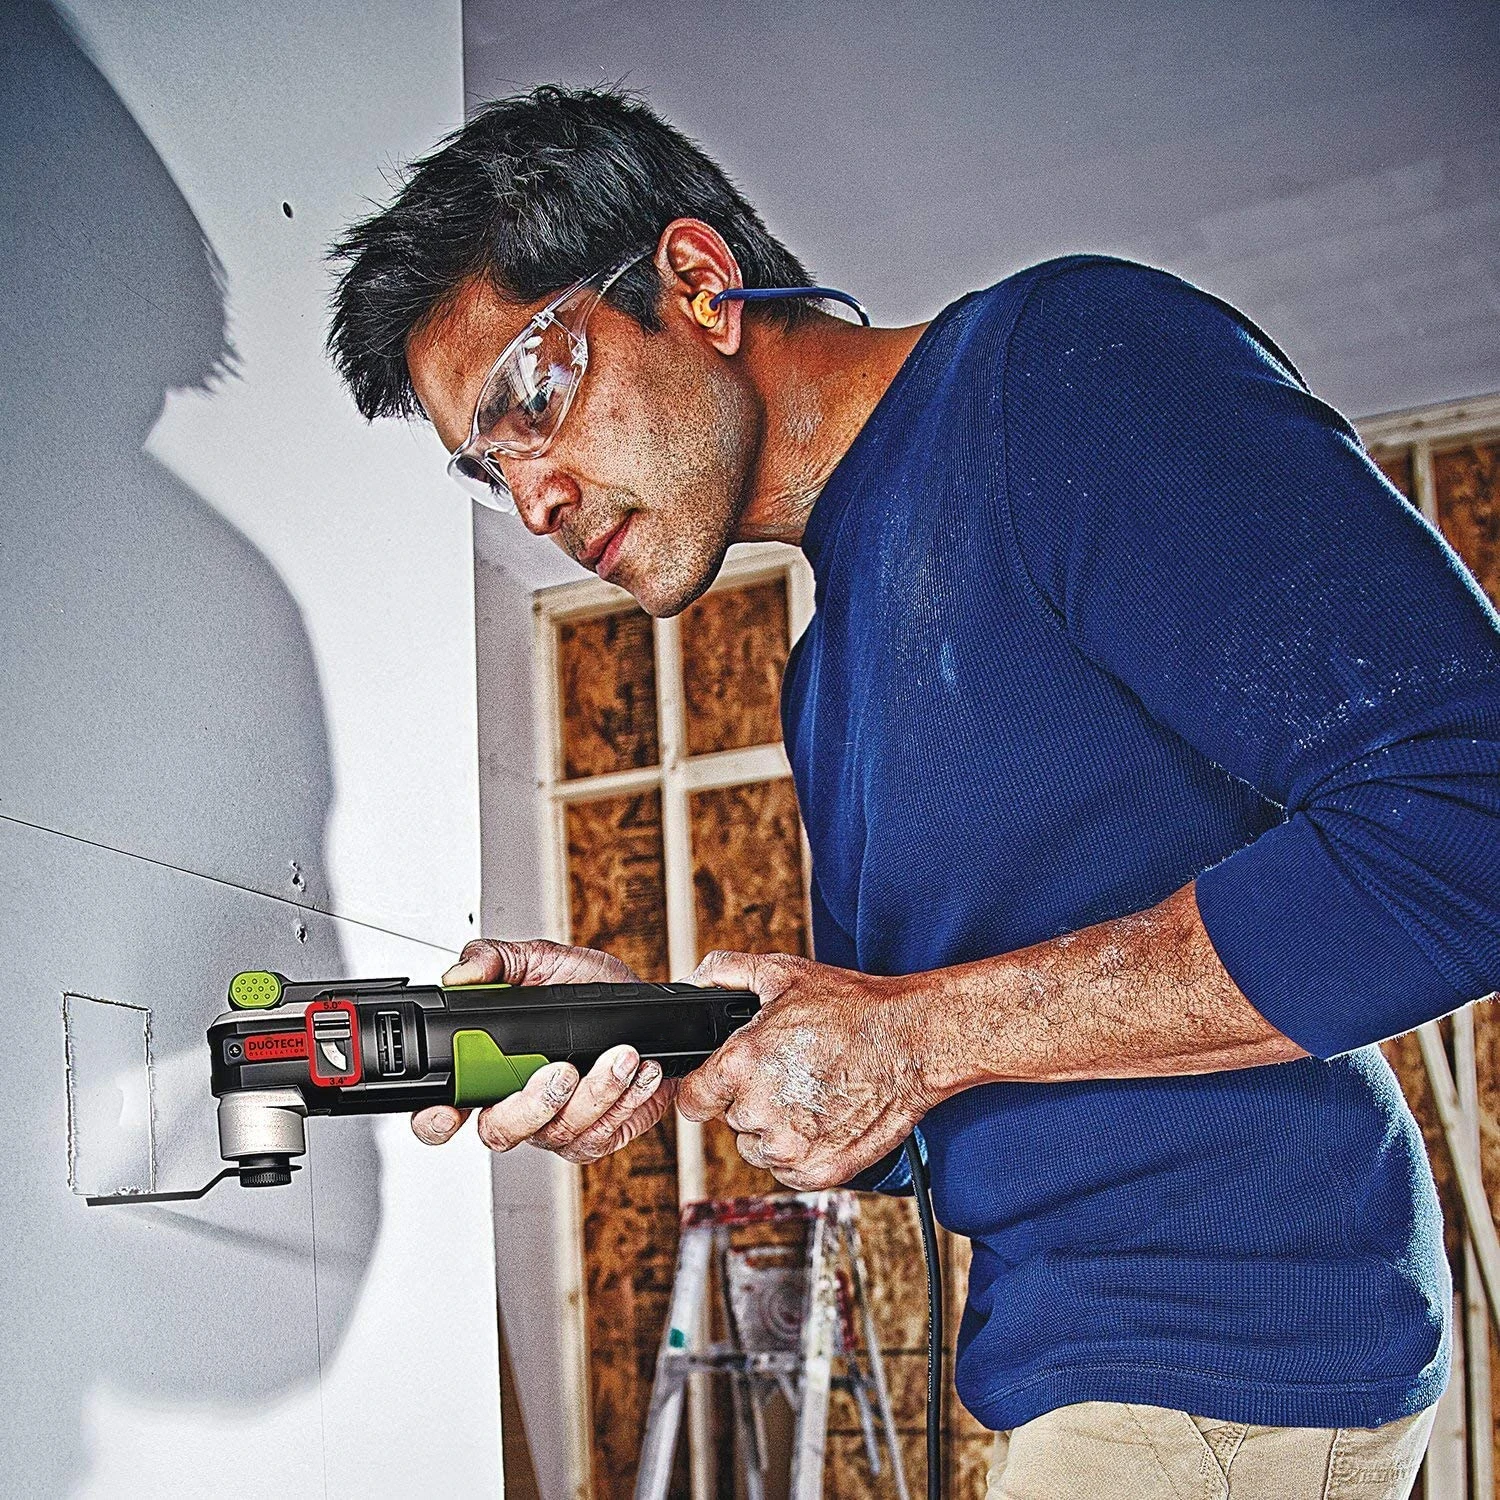 

50 Pcs Oscillating Multi Tool Saw Blade Fein Bosch Multimaster Makita Bosch Cutting Wood Tools for Renovator Power Blades